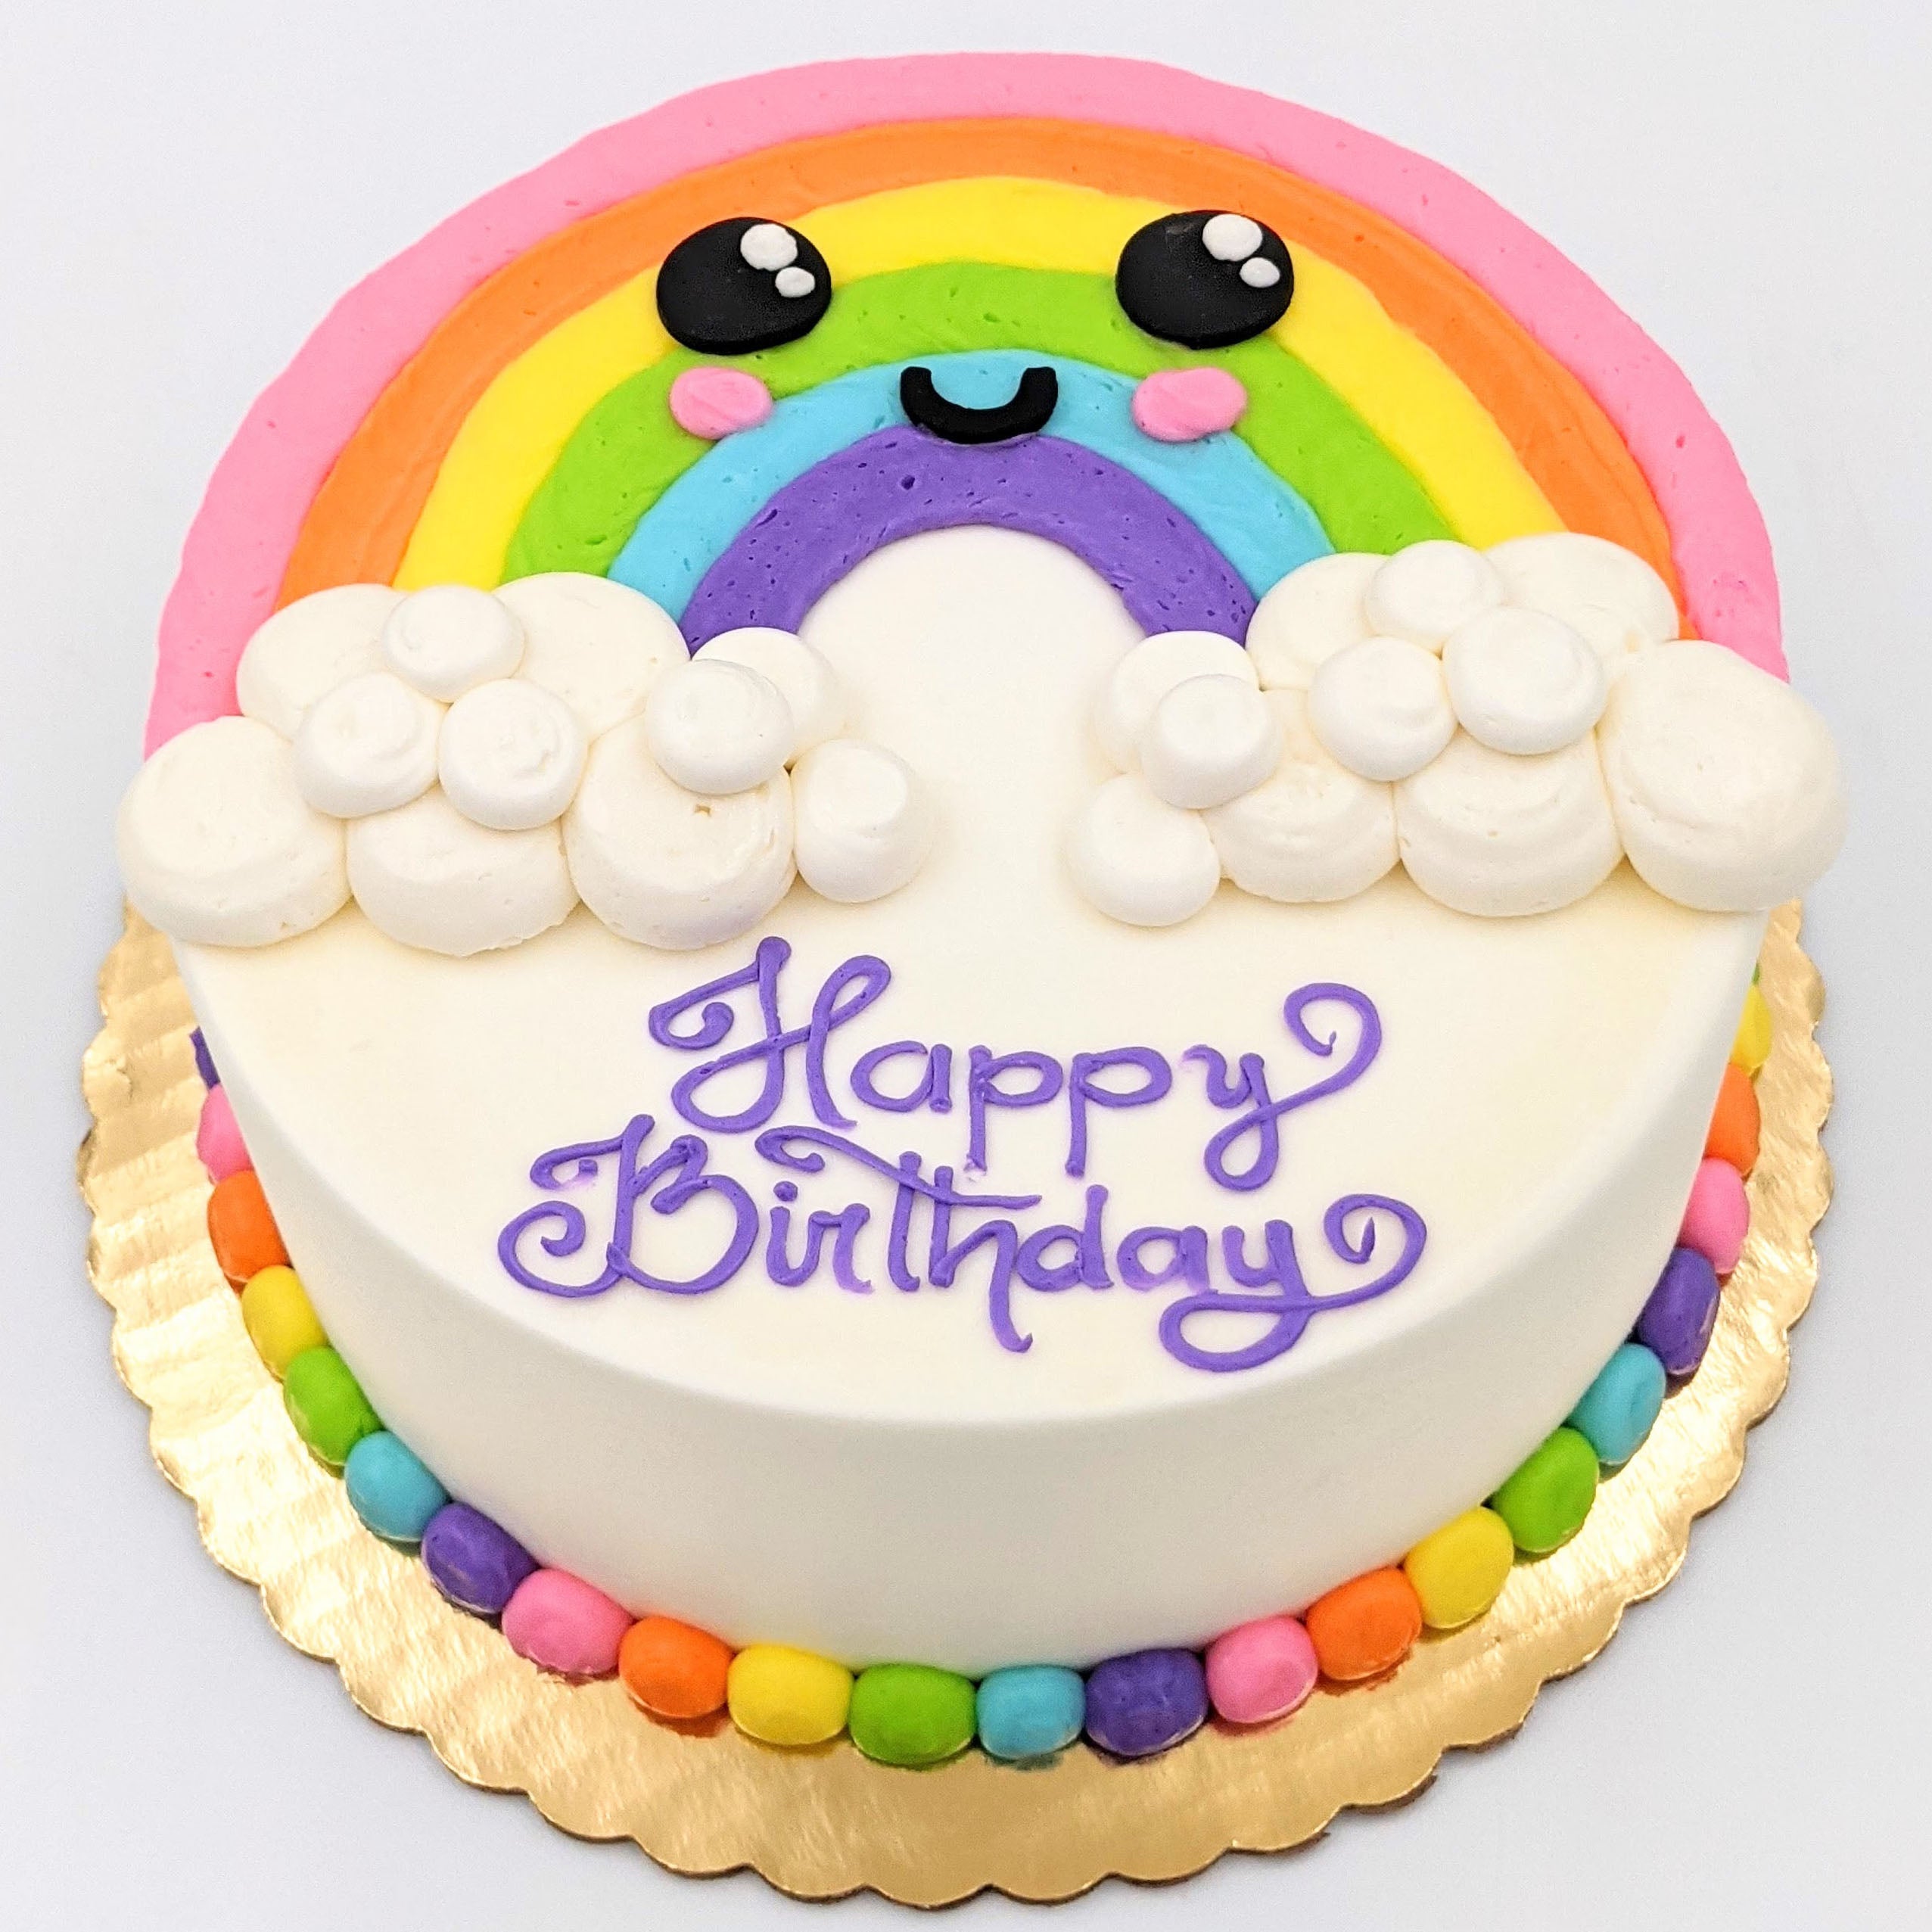 How to make a rainbow birthday cake - A House Full of Sunshine